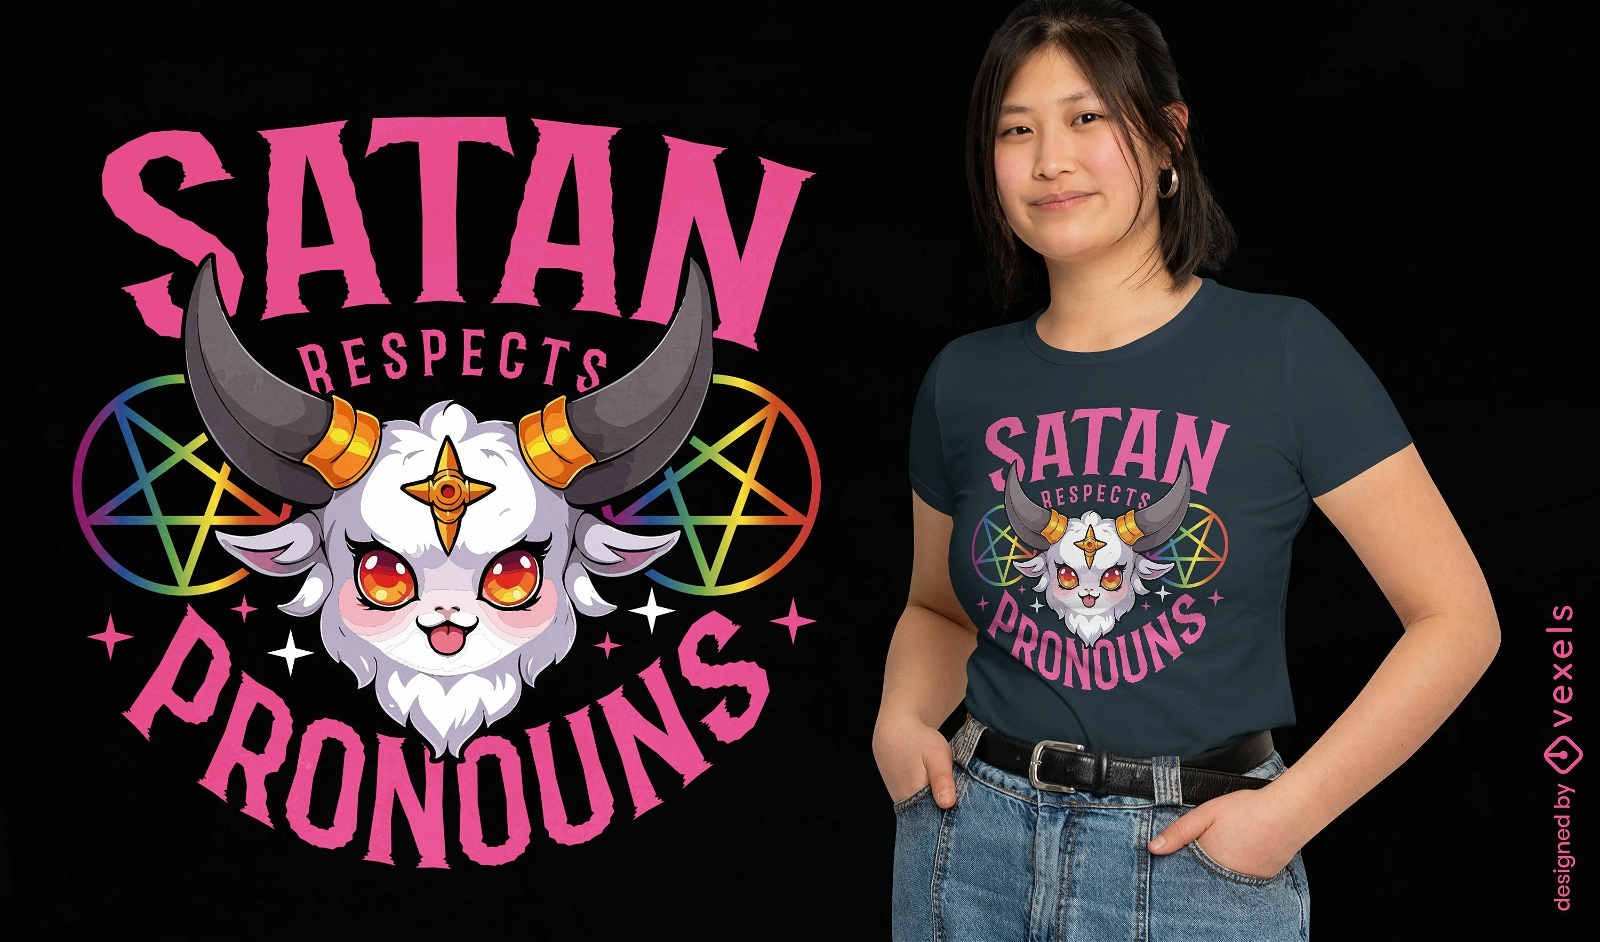 Pronouns respect t-shirt design